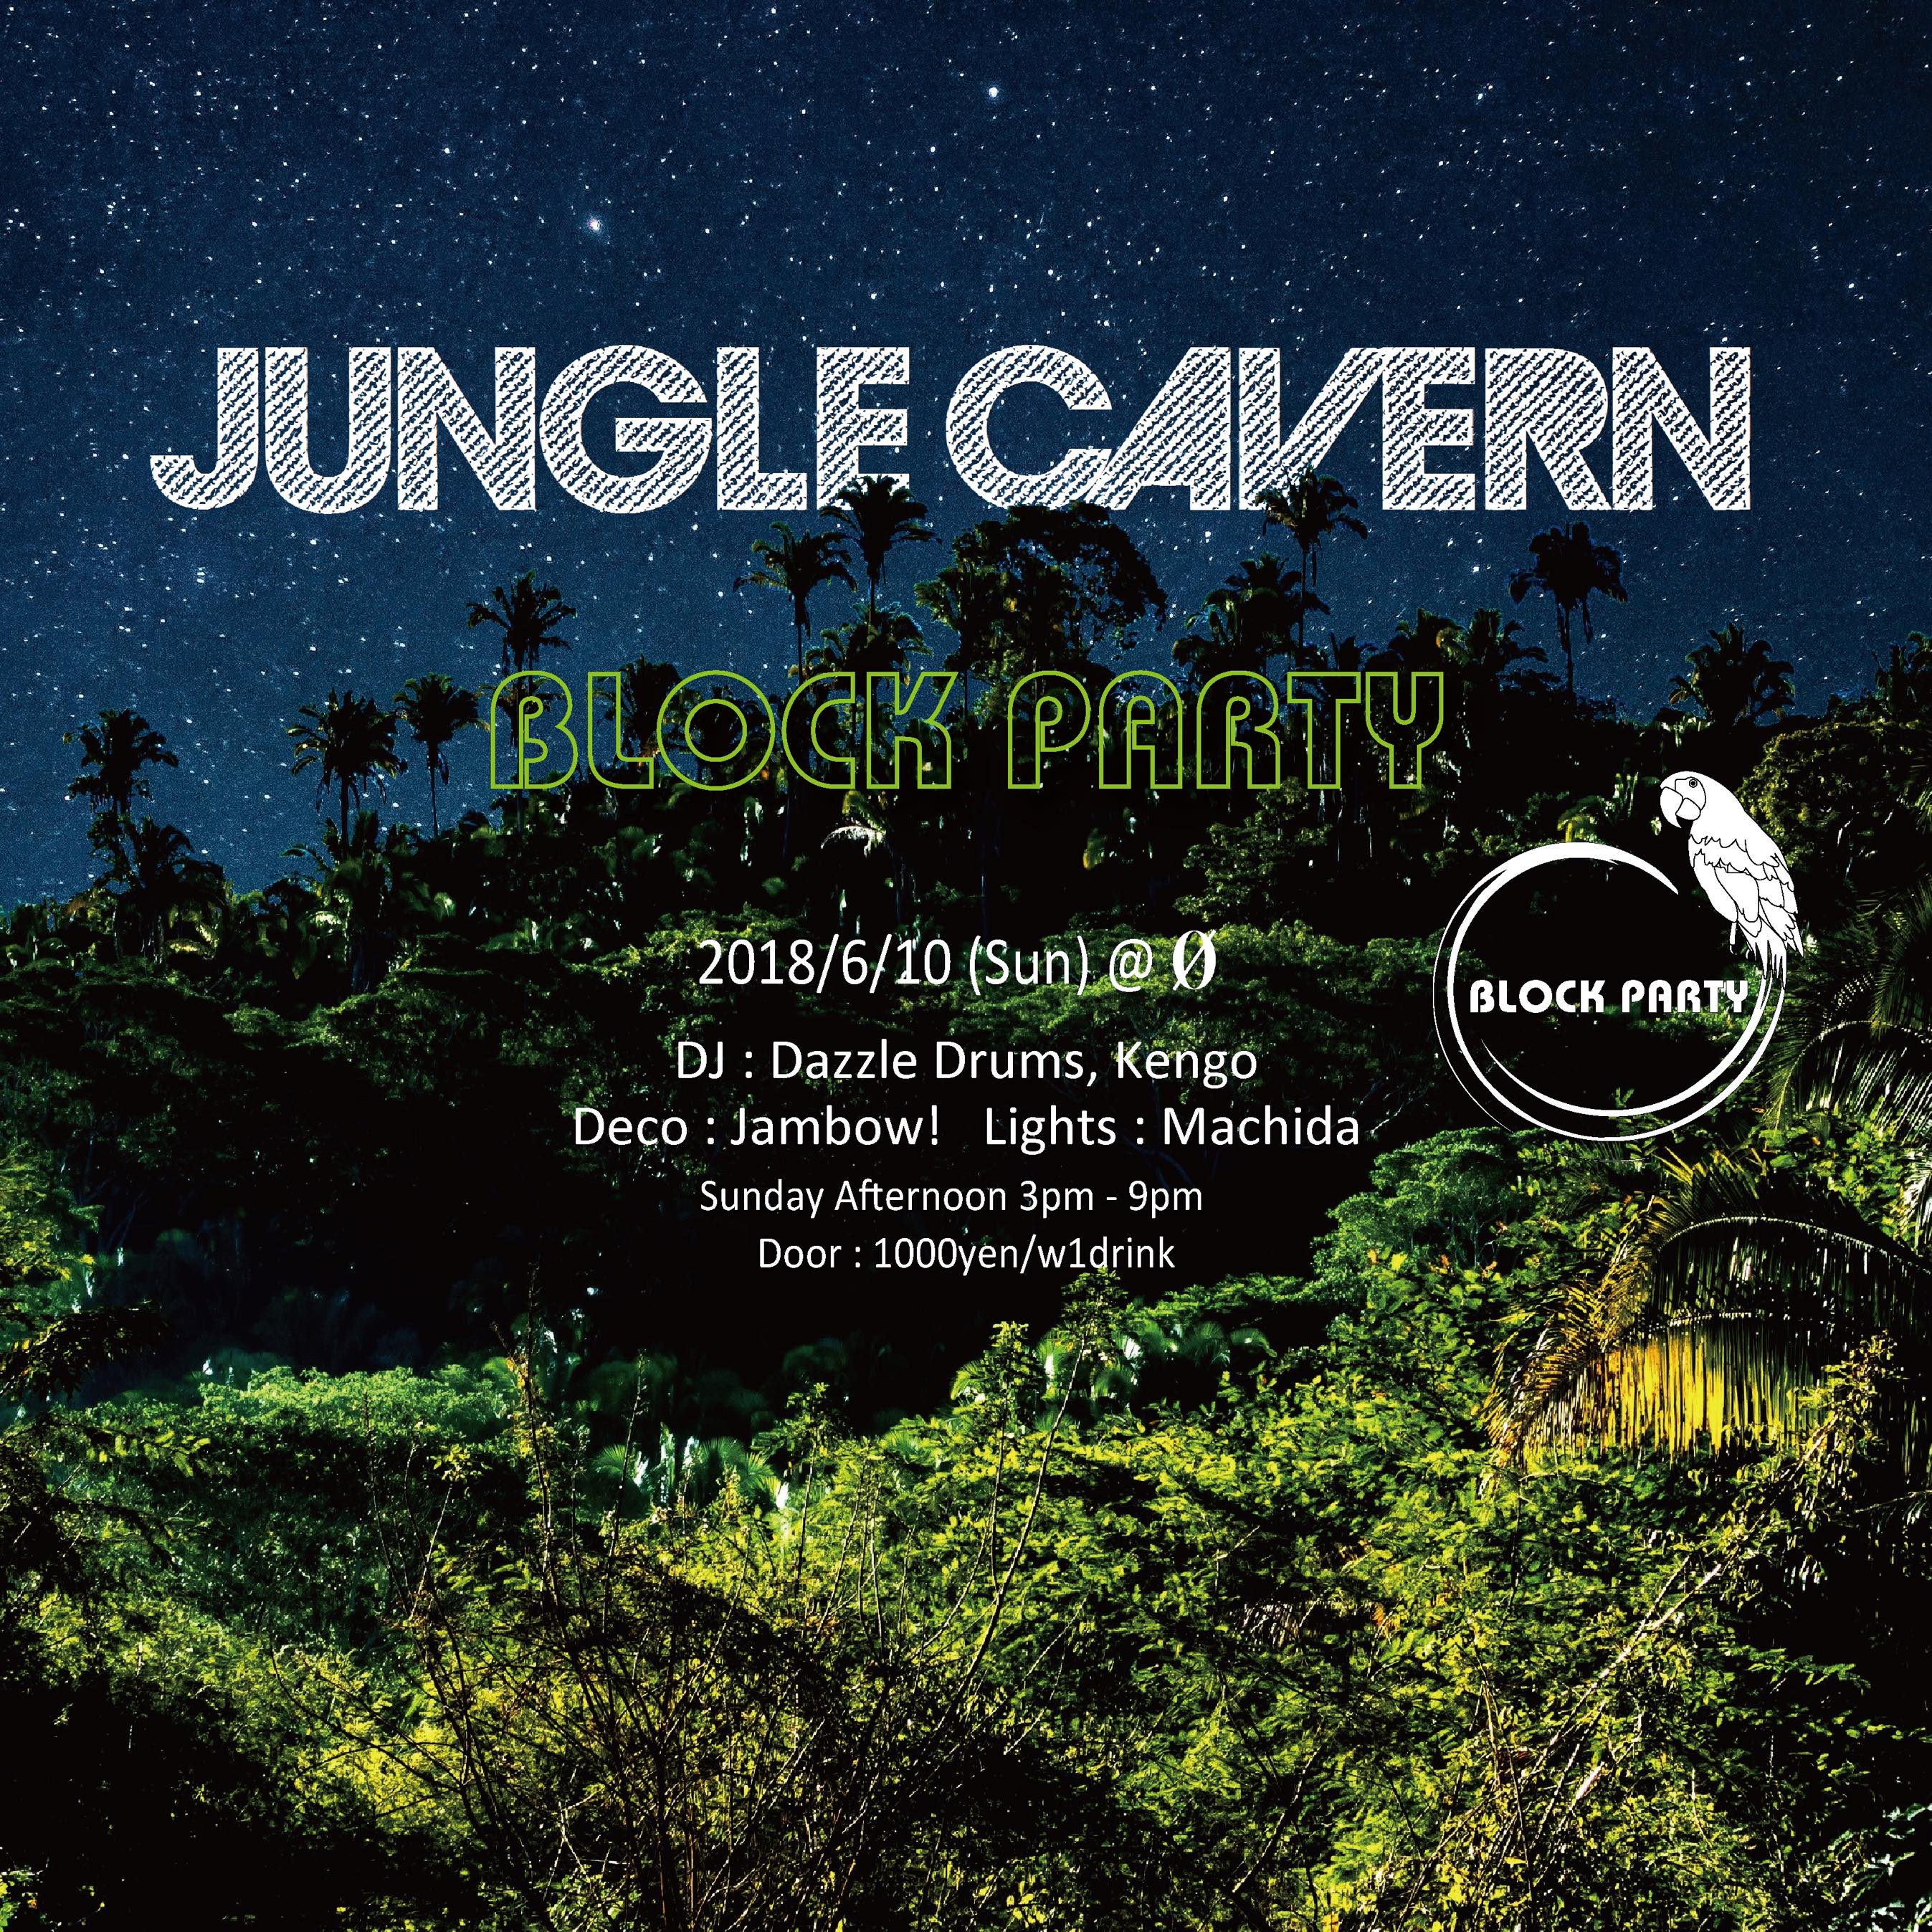 Block Party “Jungle Cavern”